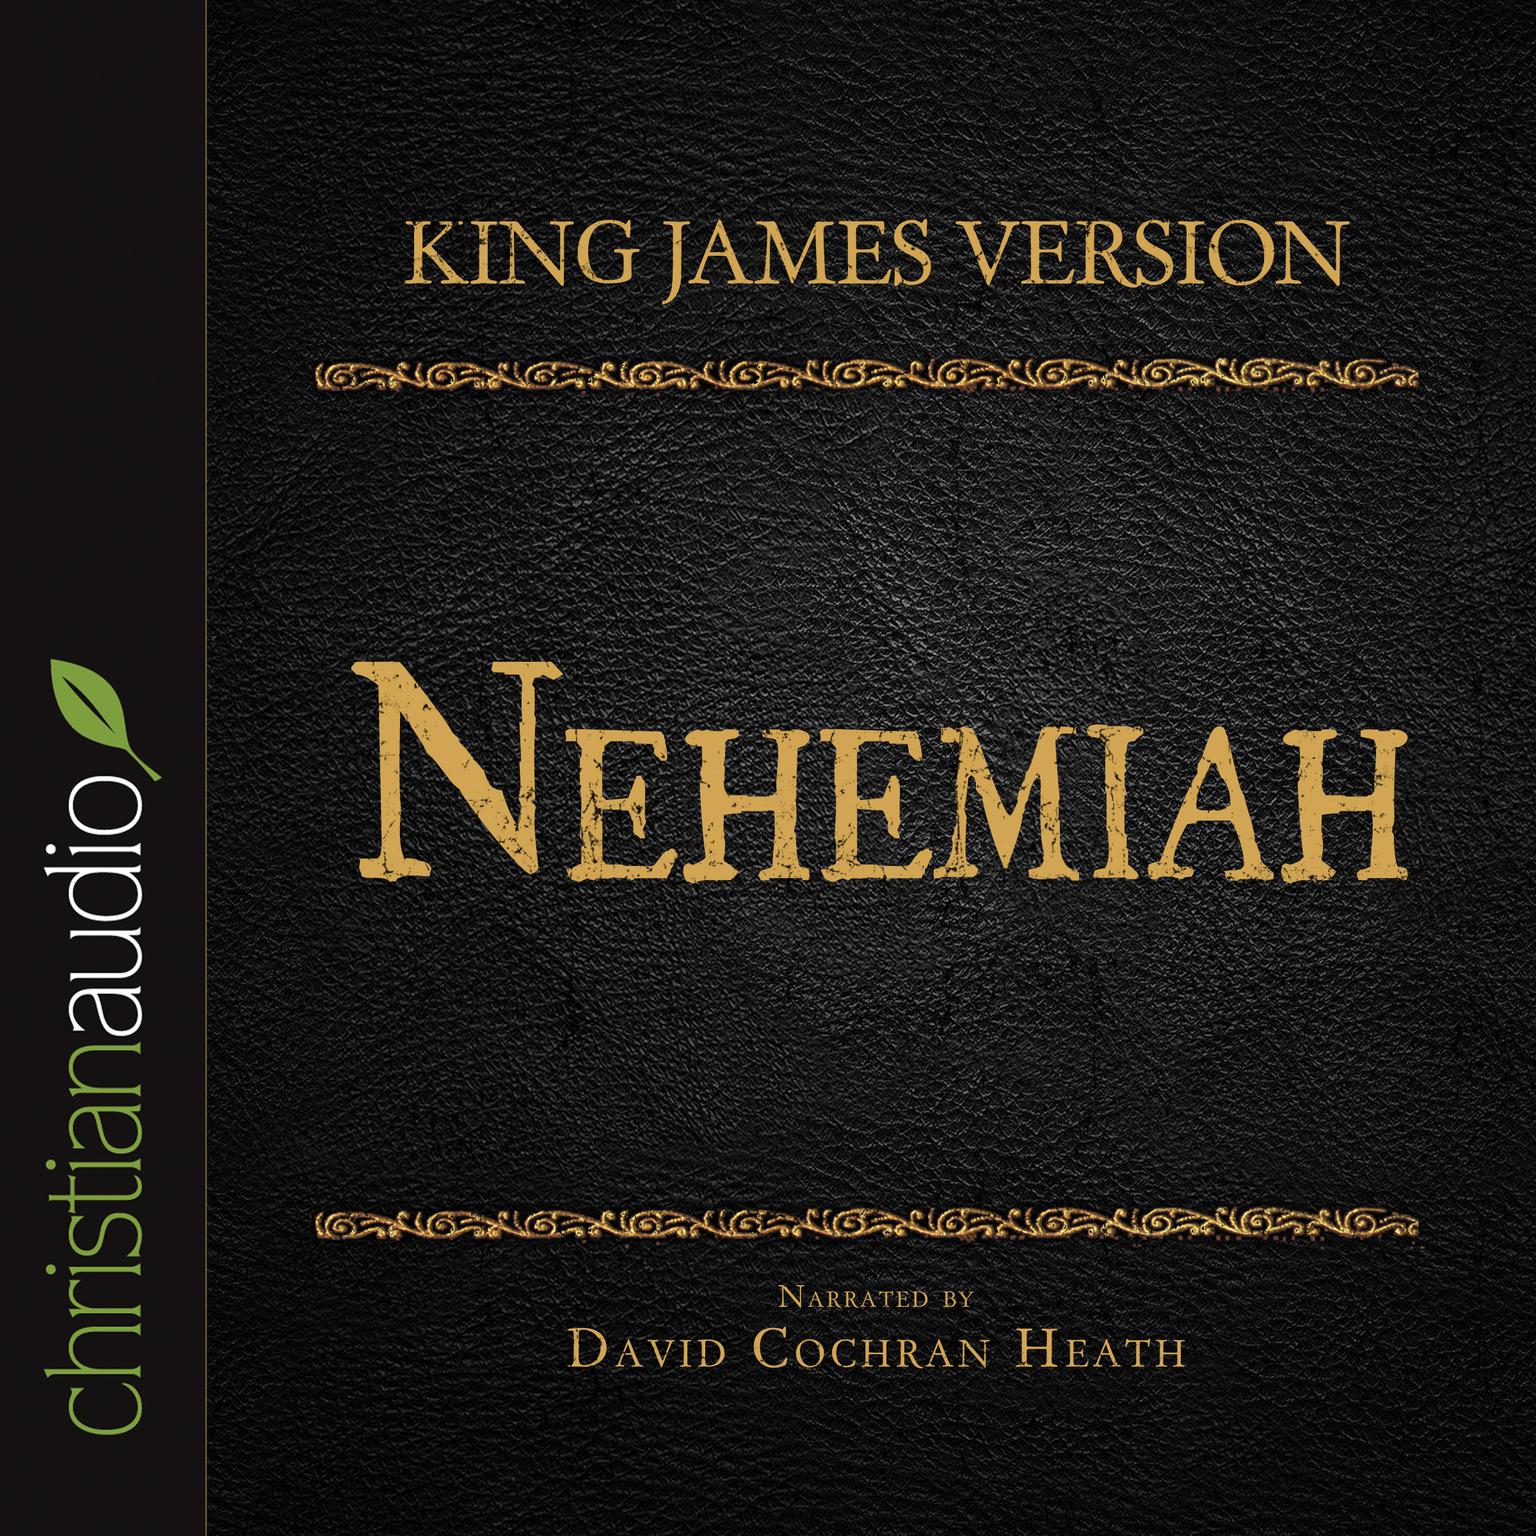 Holy Bible in Audio - King James Version: Nehemiah Audiobook, by David Cochran Heath